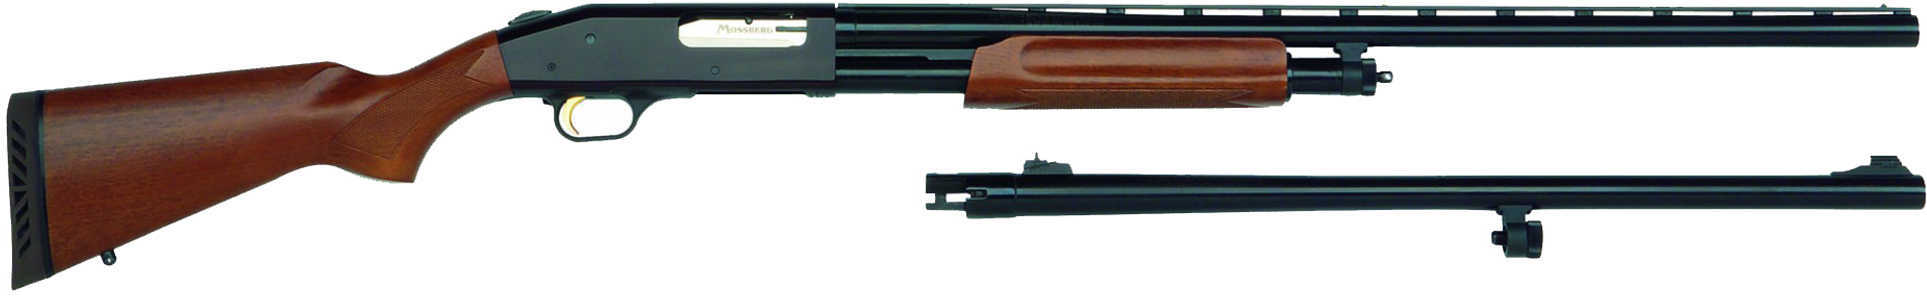 Mossberg 535 ATS Combo Field & Deer 12 Gauge Shotgun 24 "/28" Barrels Blued Finish 45310